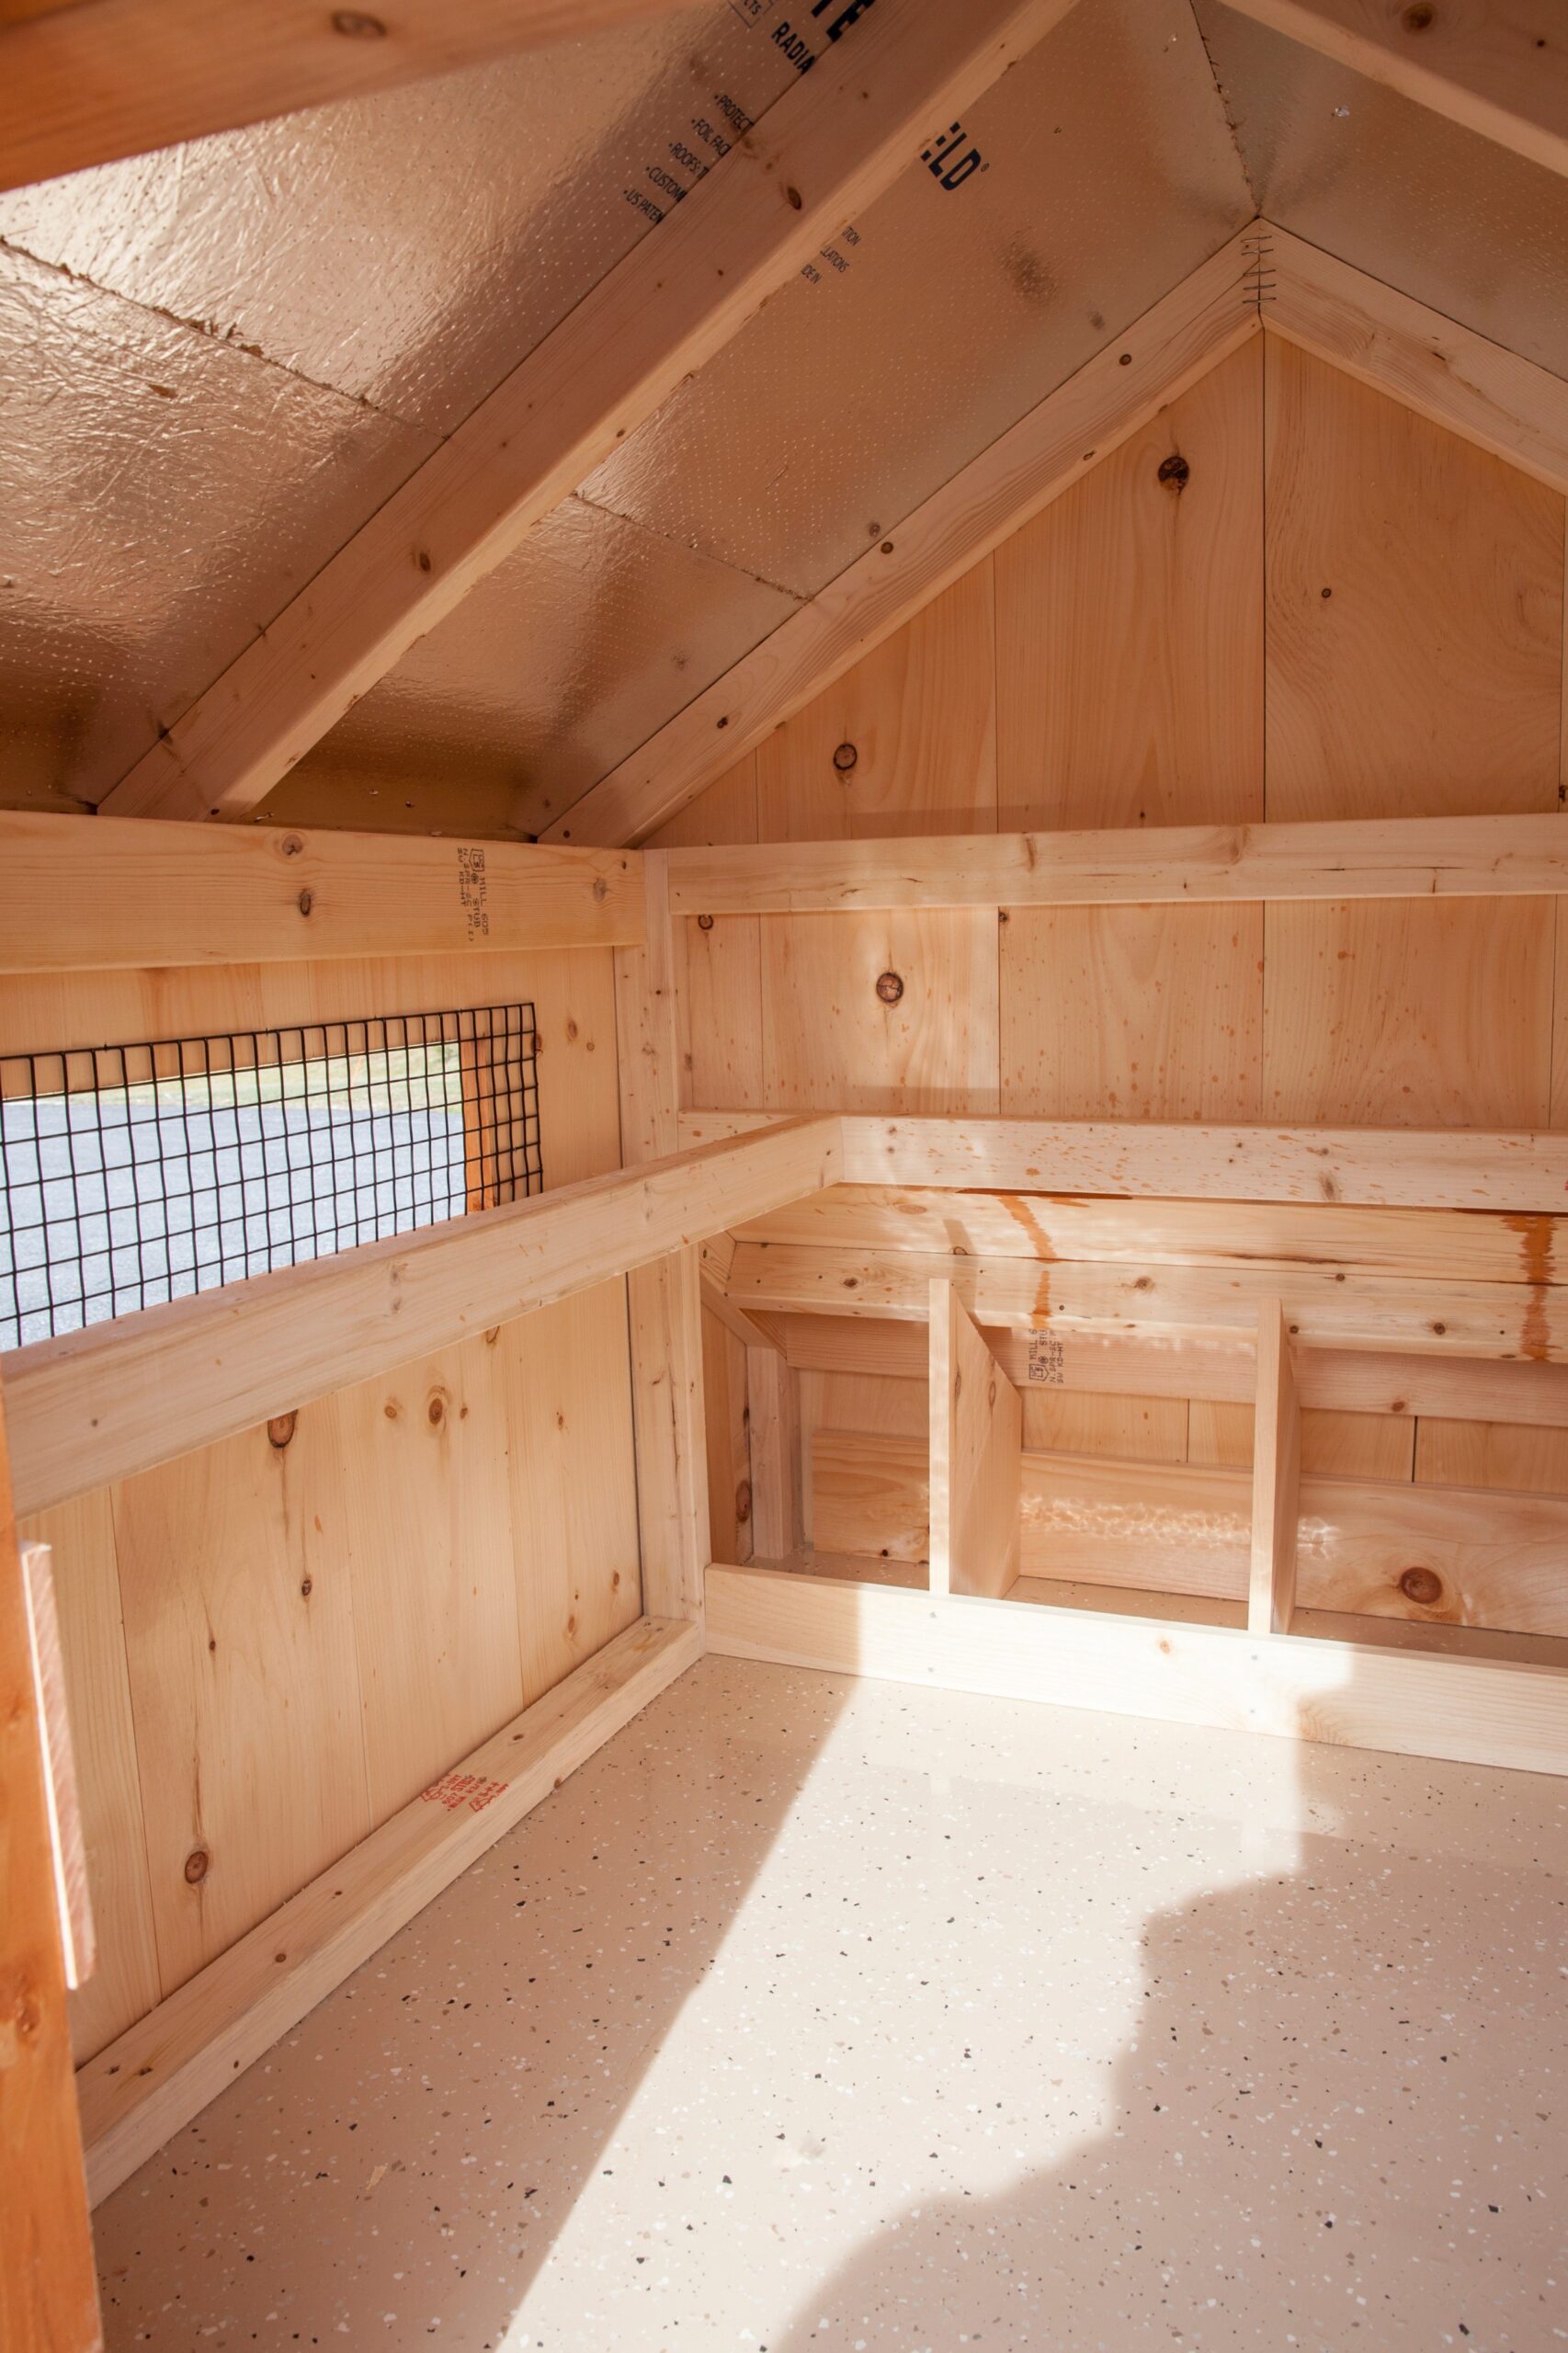 Interior of a 4x4 A-Frame chicken coop